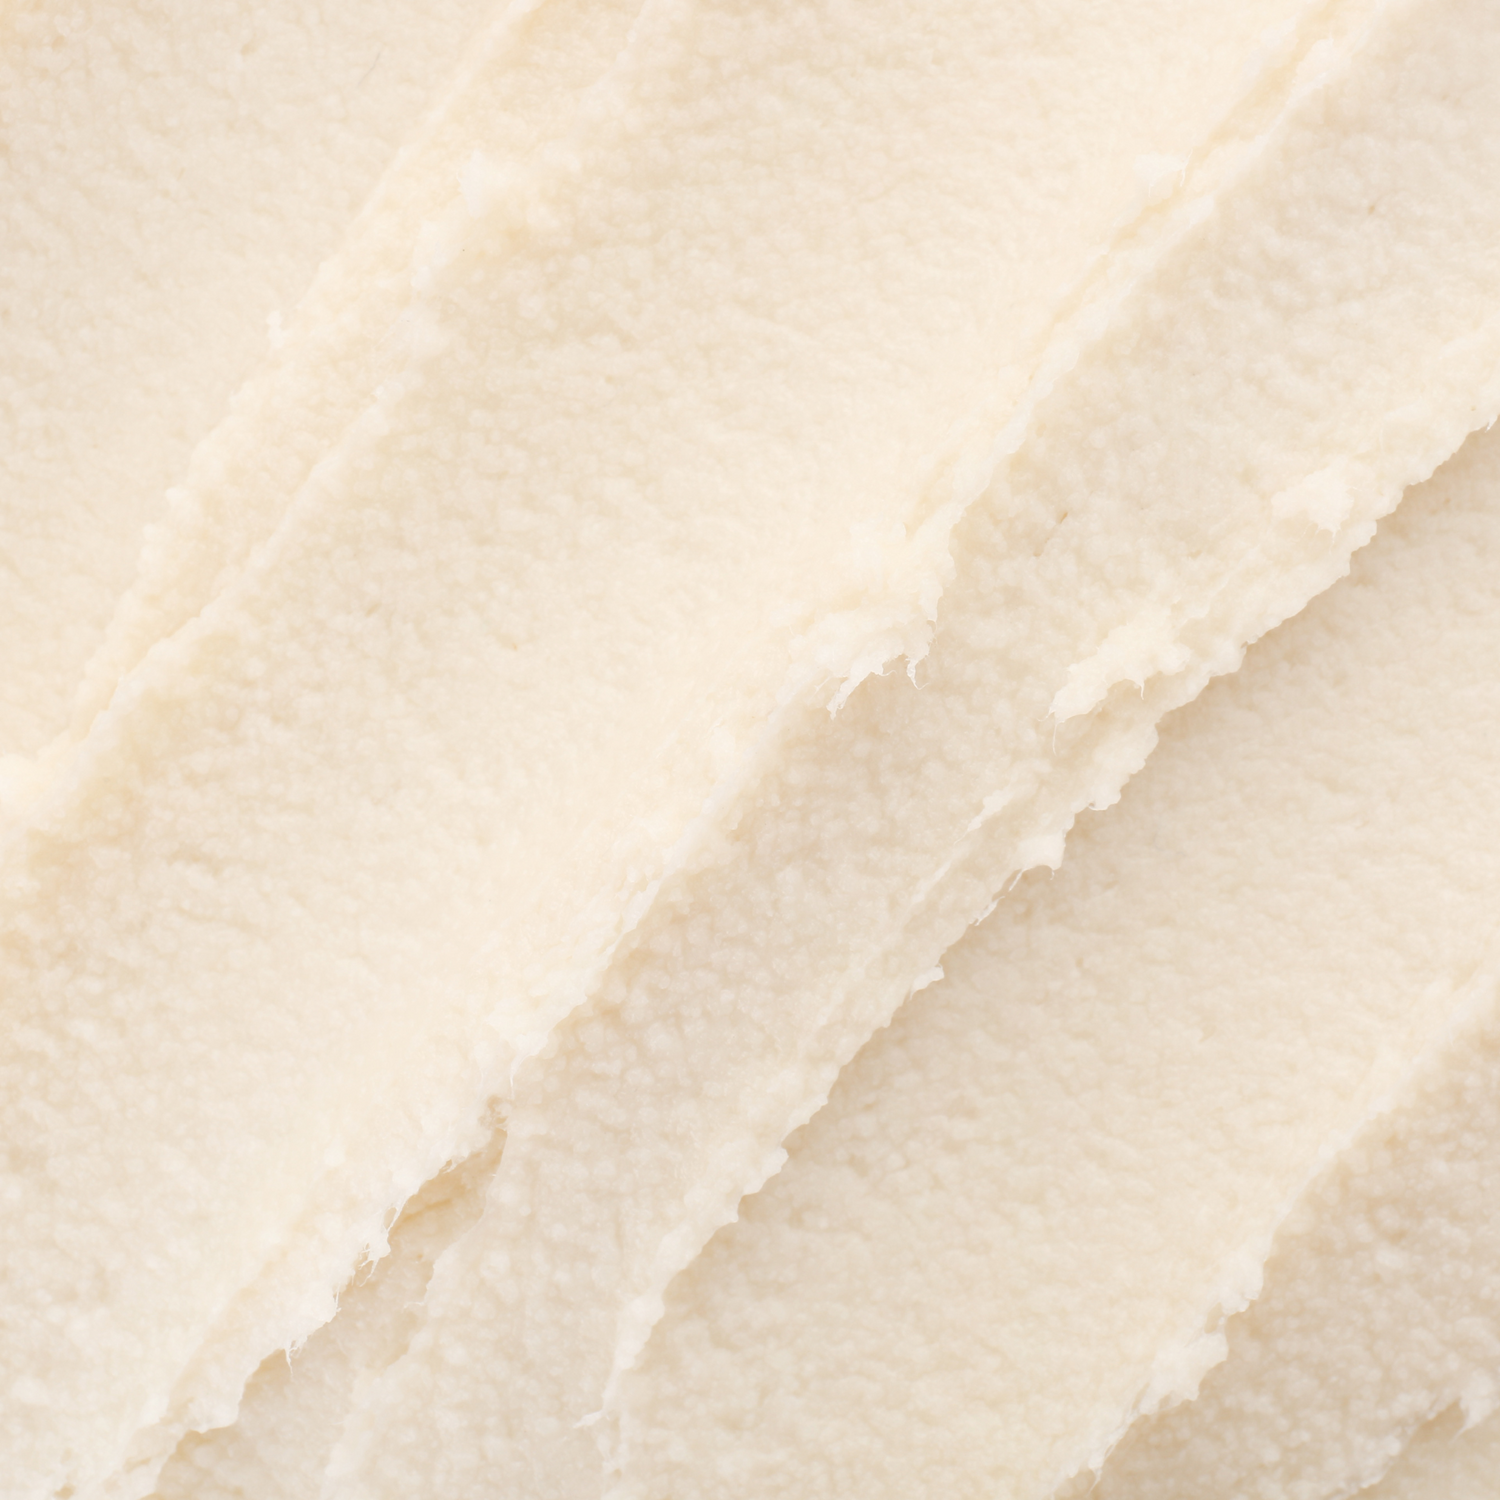 A close-up of shea butter